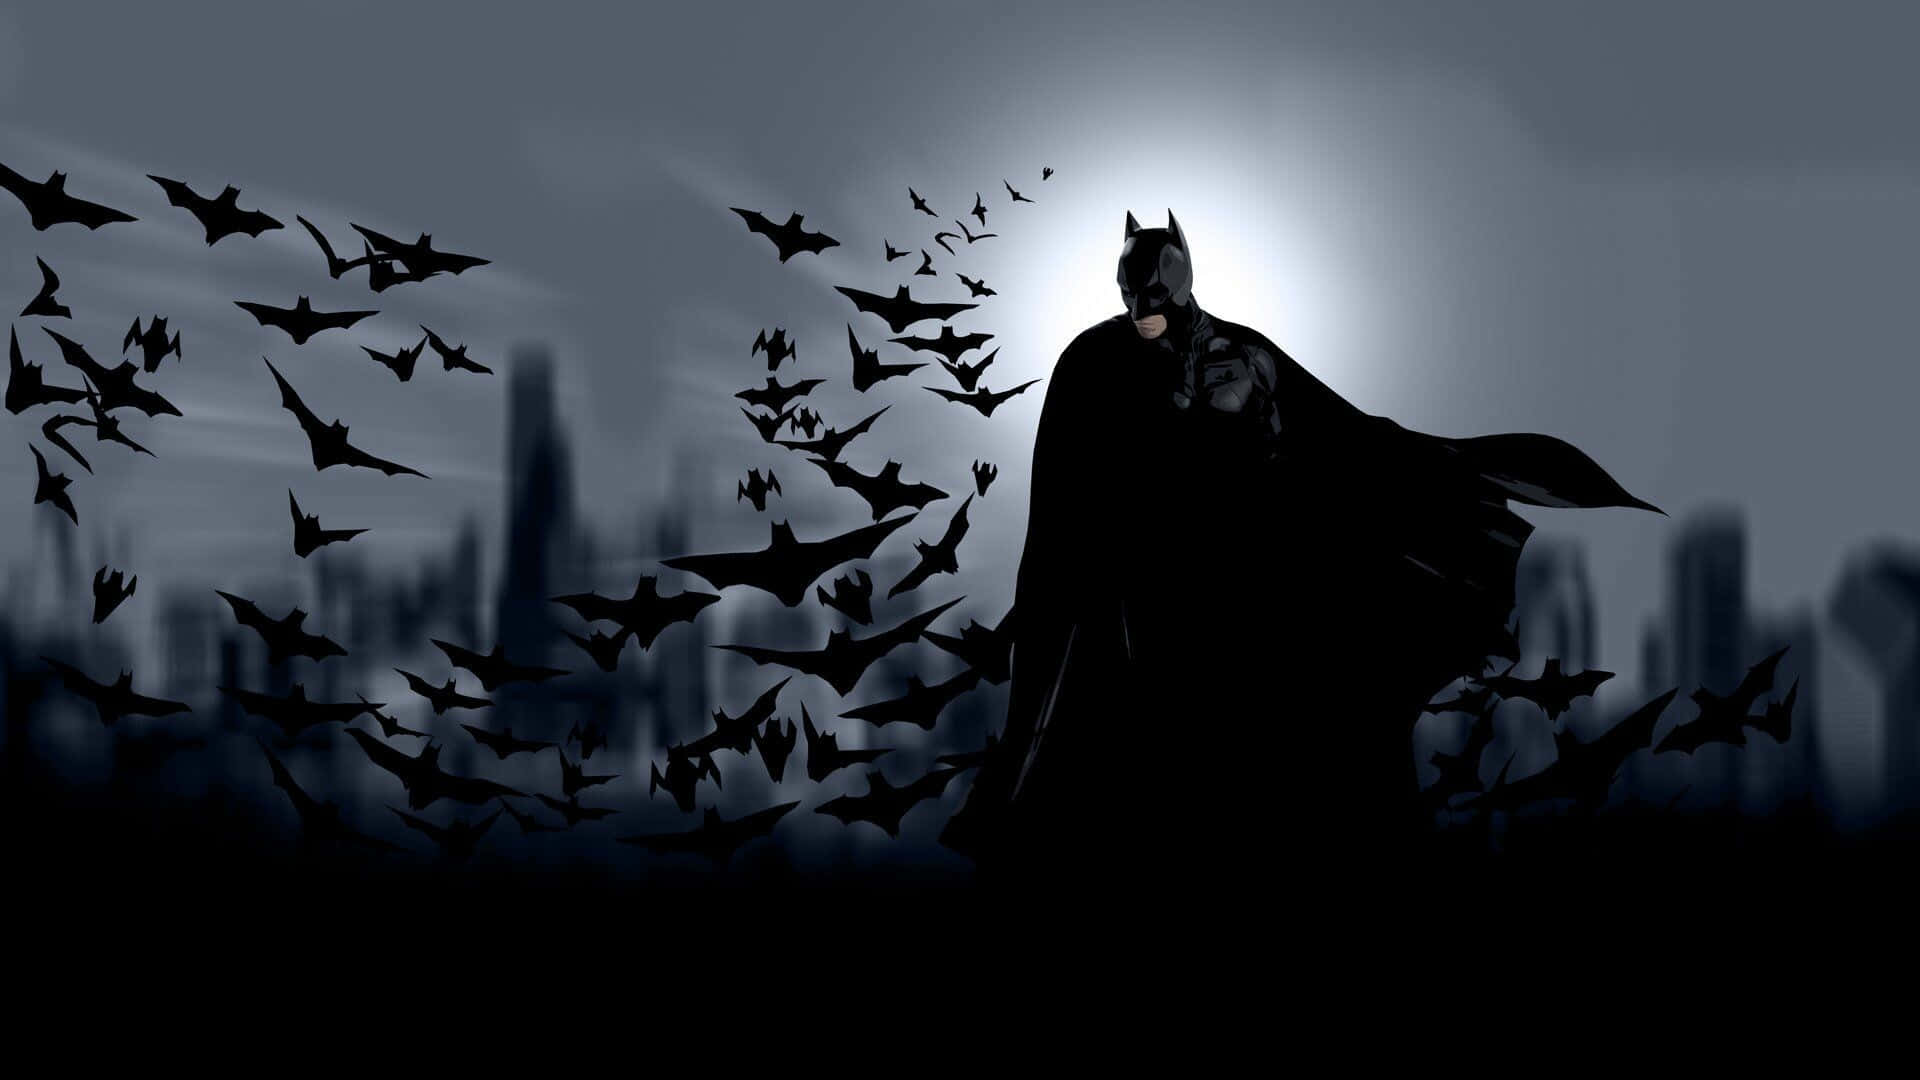 Batman In The Dark Sky With Bats Flying Around Him Wallpaper